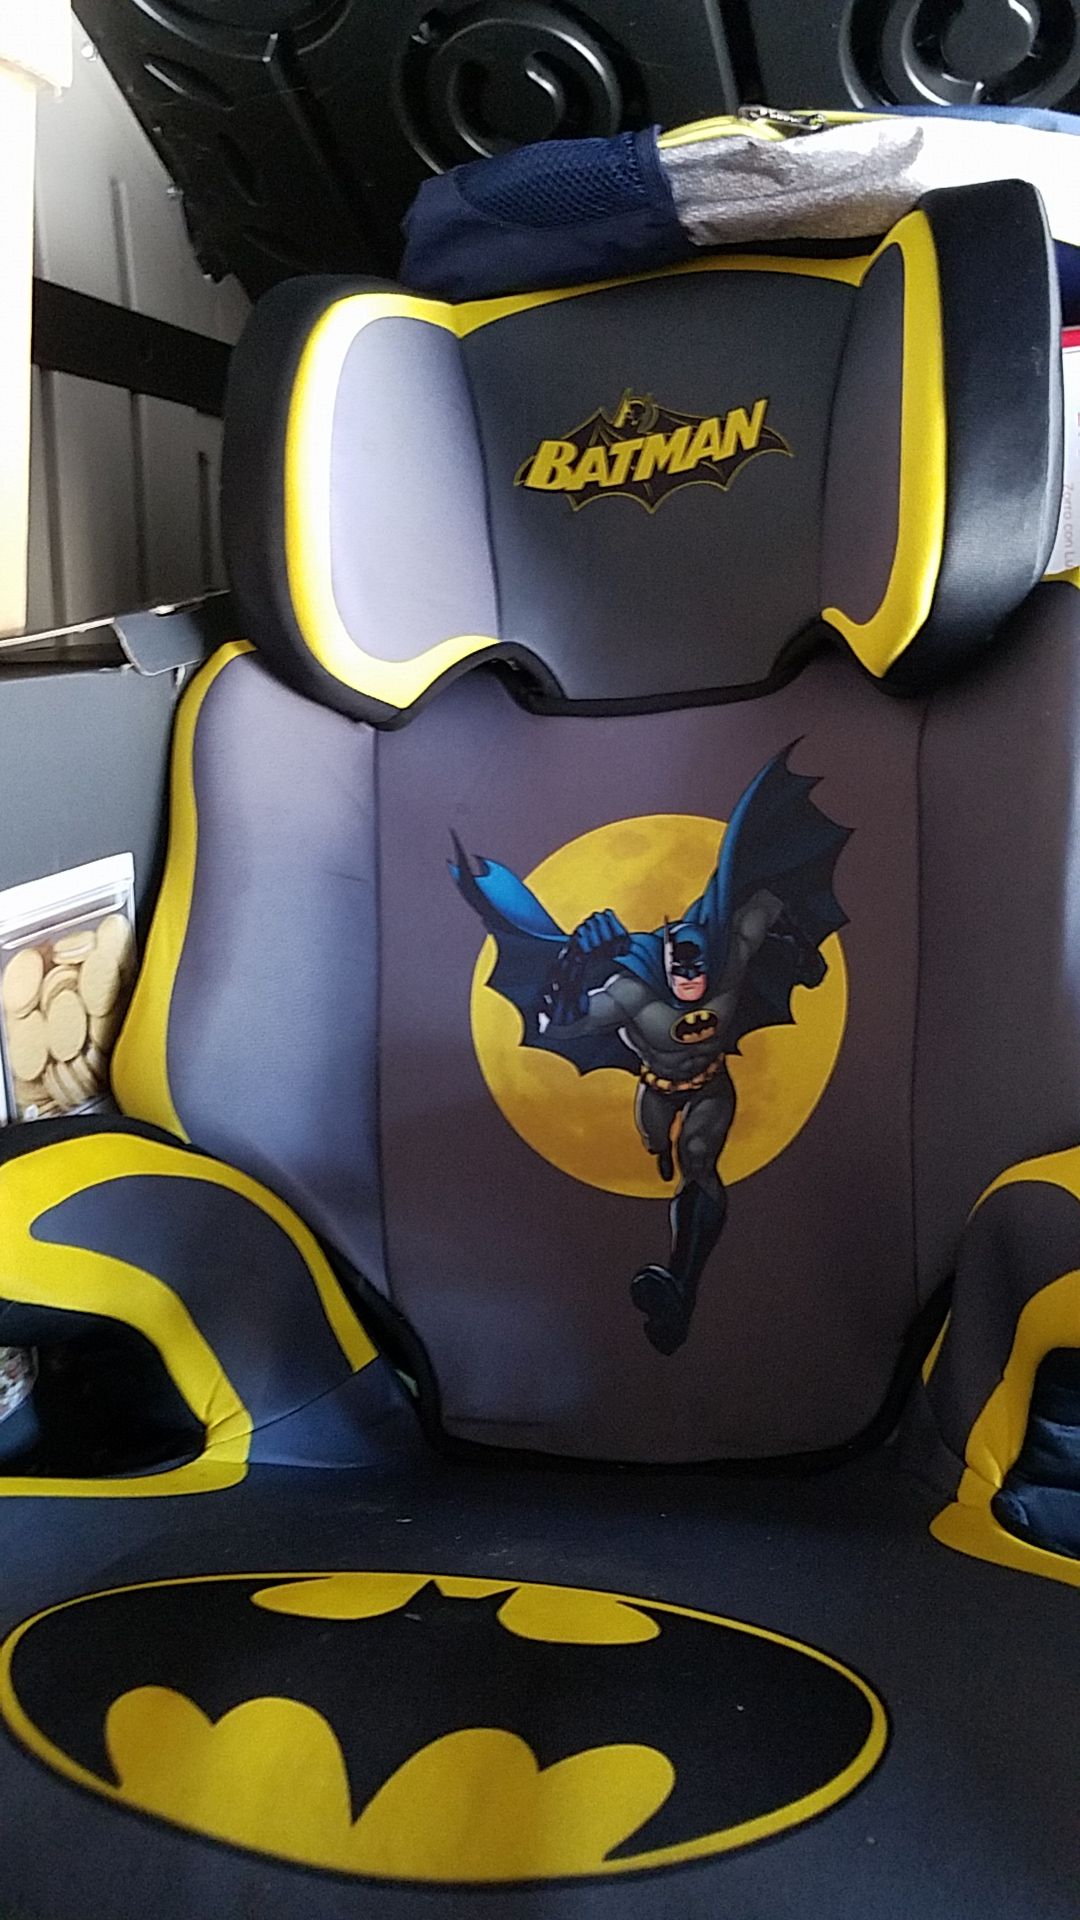 Batman booster seat